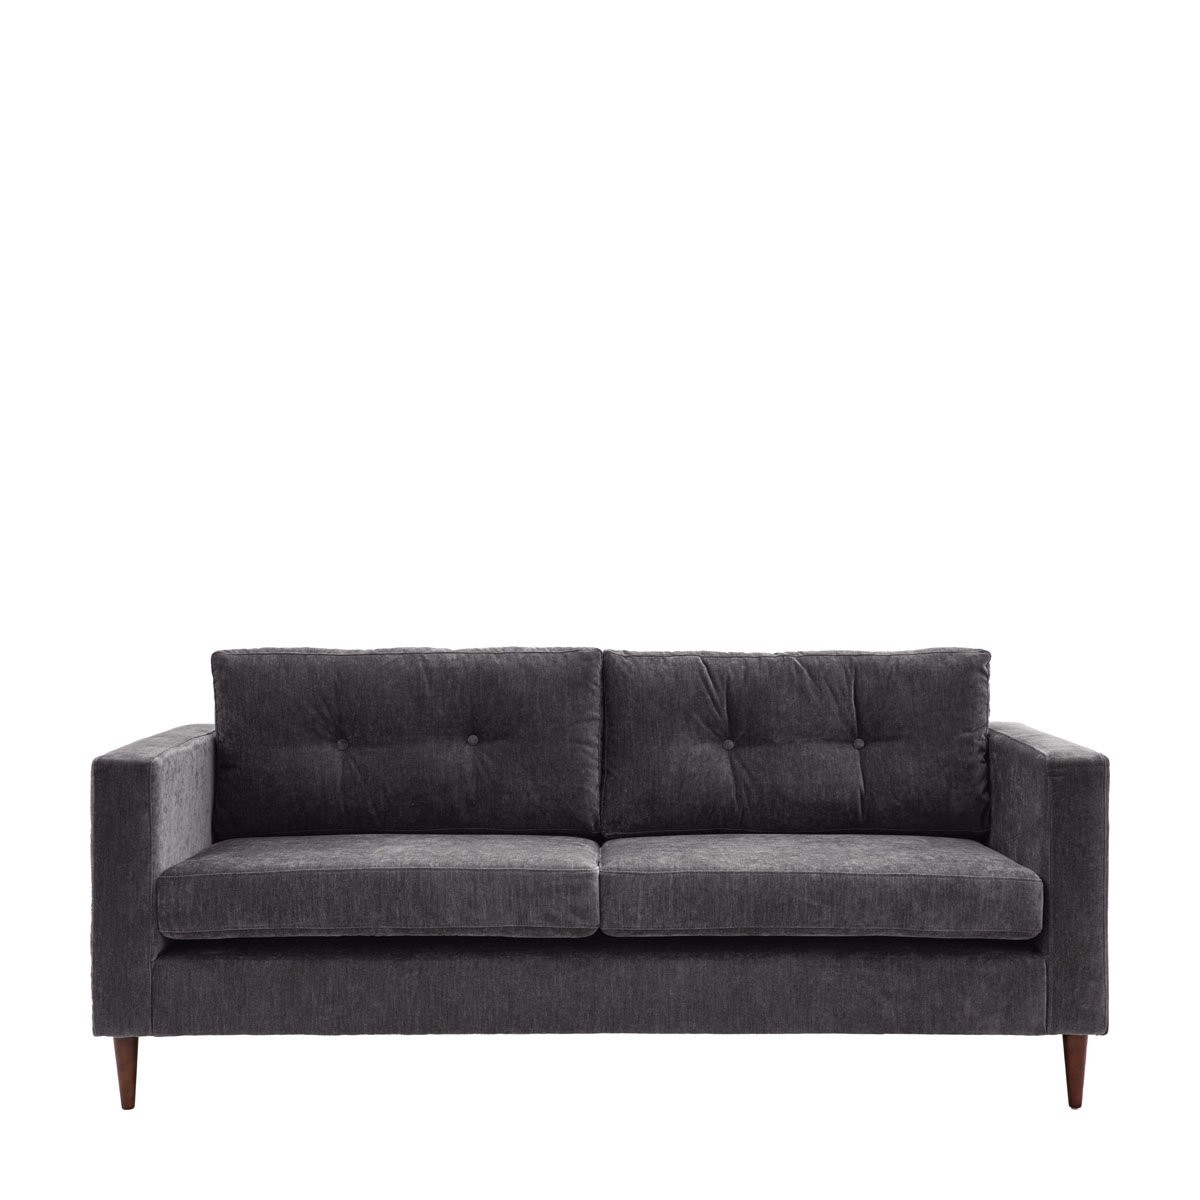 Whitwell Sofa 3 Seater Charcoal 1950x860x840mm